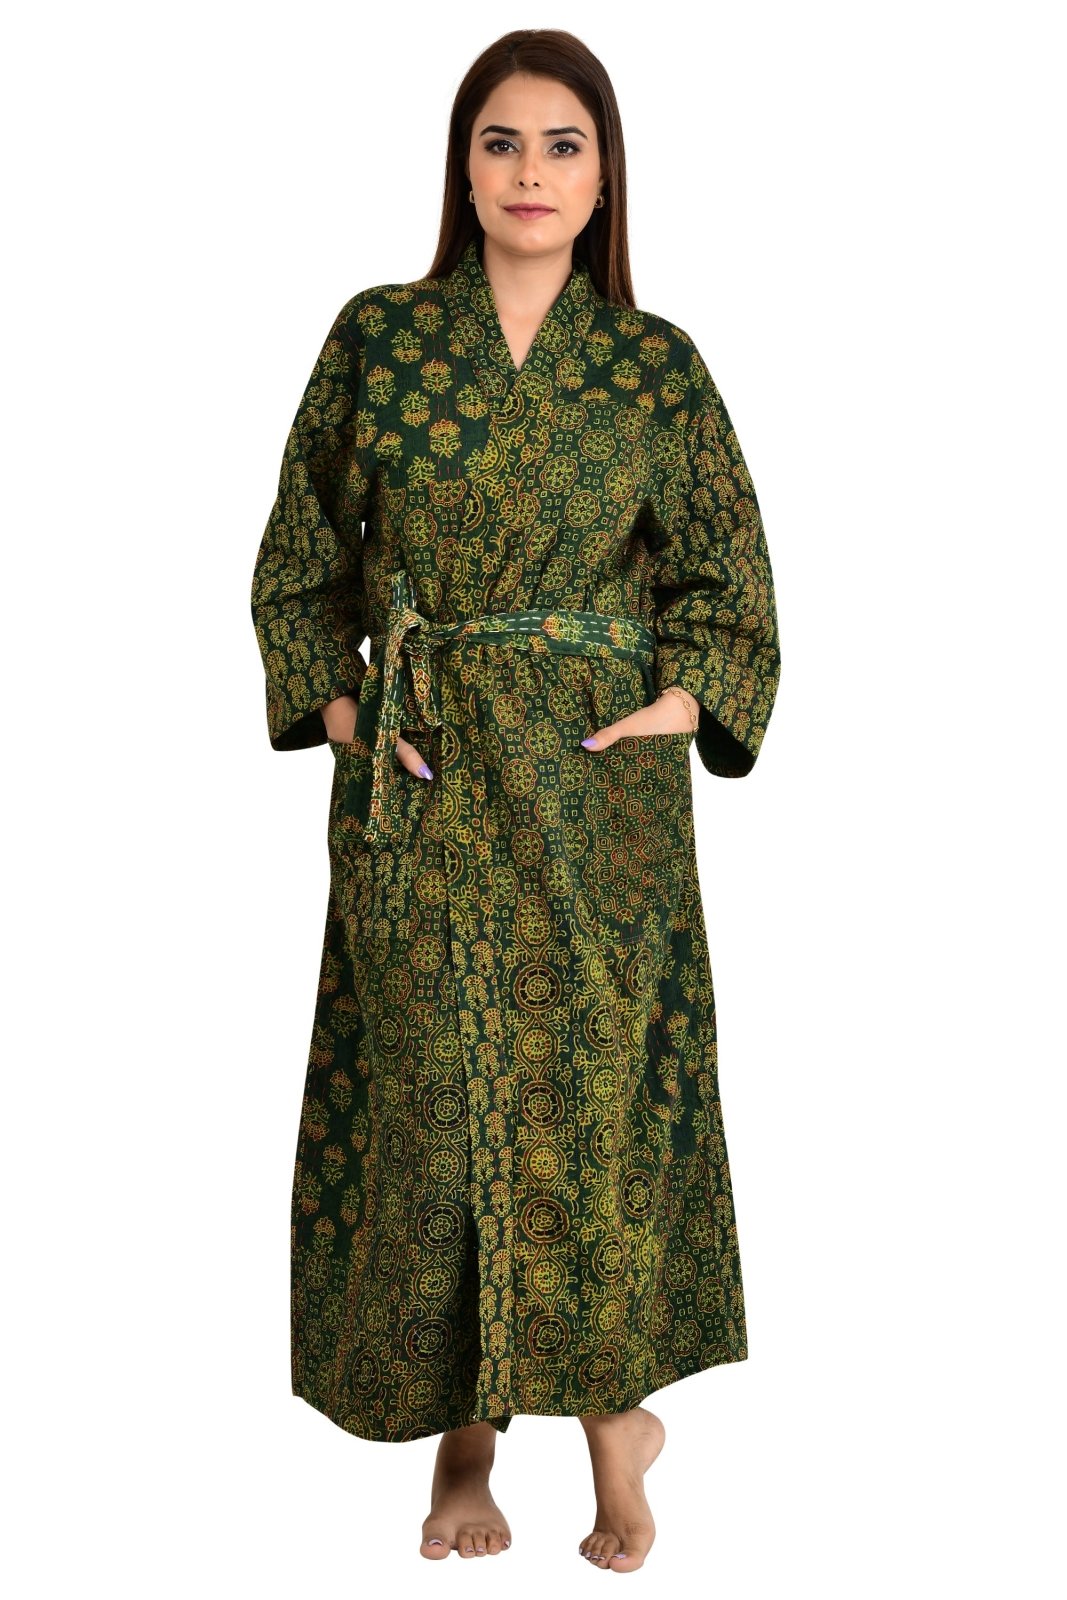 Kantha Stitch 100% Cotton Reversible Long Kimono Women Jacket | Handmade Stitch Robe | Unisex Gift | Red Orange Yellow Ajrakh Print - The Eastern Loom